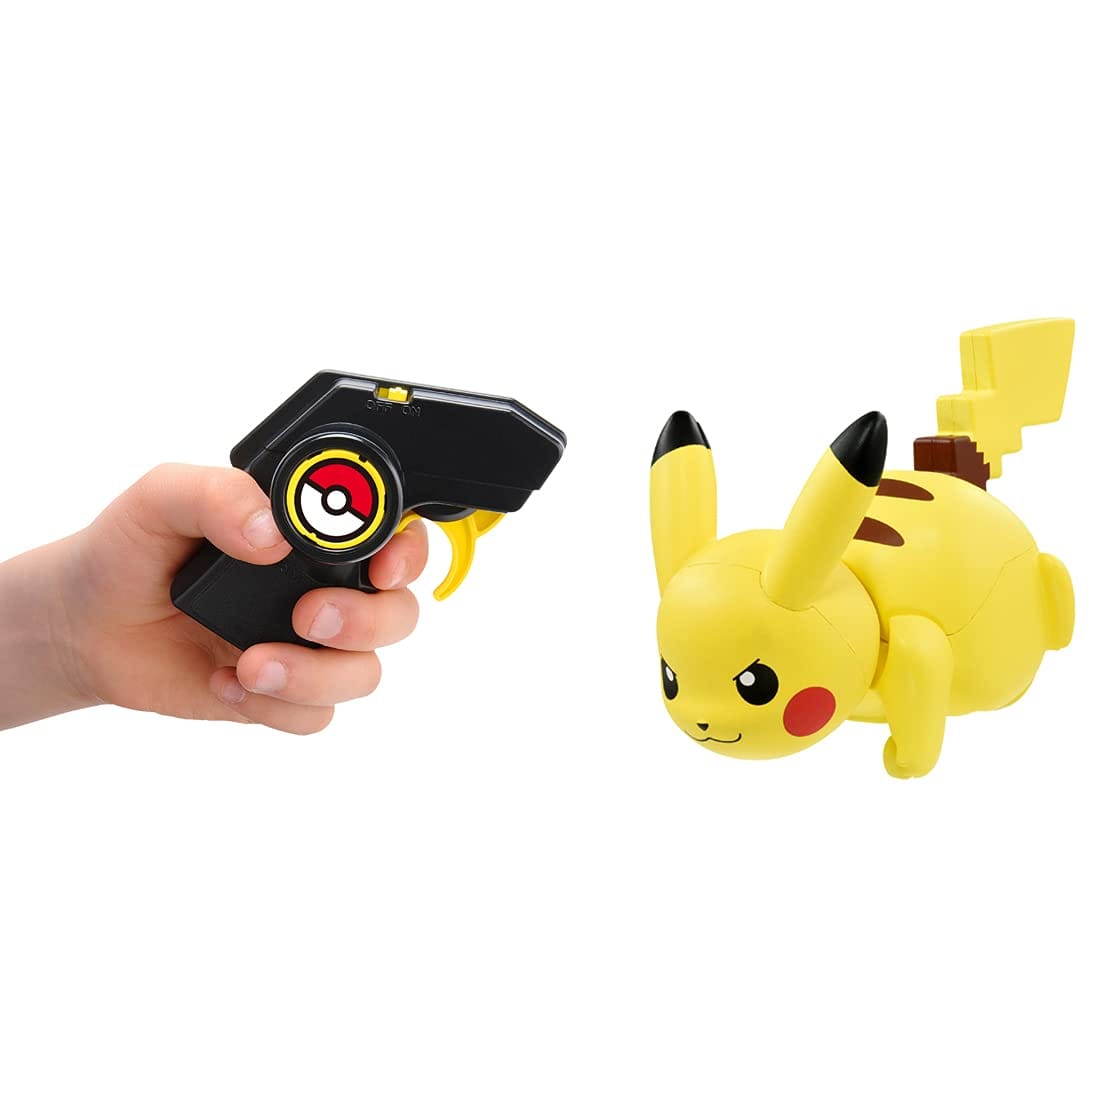 (c)Nintendo・Creatures・GAME FREAK・TV Tokyo・ShoPro・JR Kikaku (c)Pokémonコントローラー:単4形アルカリ乾電池2本使用(電池は別売です。) 本体:リチウムポリマー電池1個使用(電池は内蔵です。)付属品:本体(1),コントローラー(1),USBケーブル(1),取扱説明書(1)原産国:中国